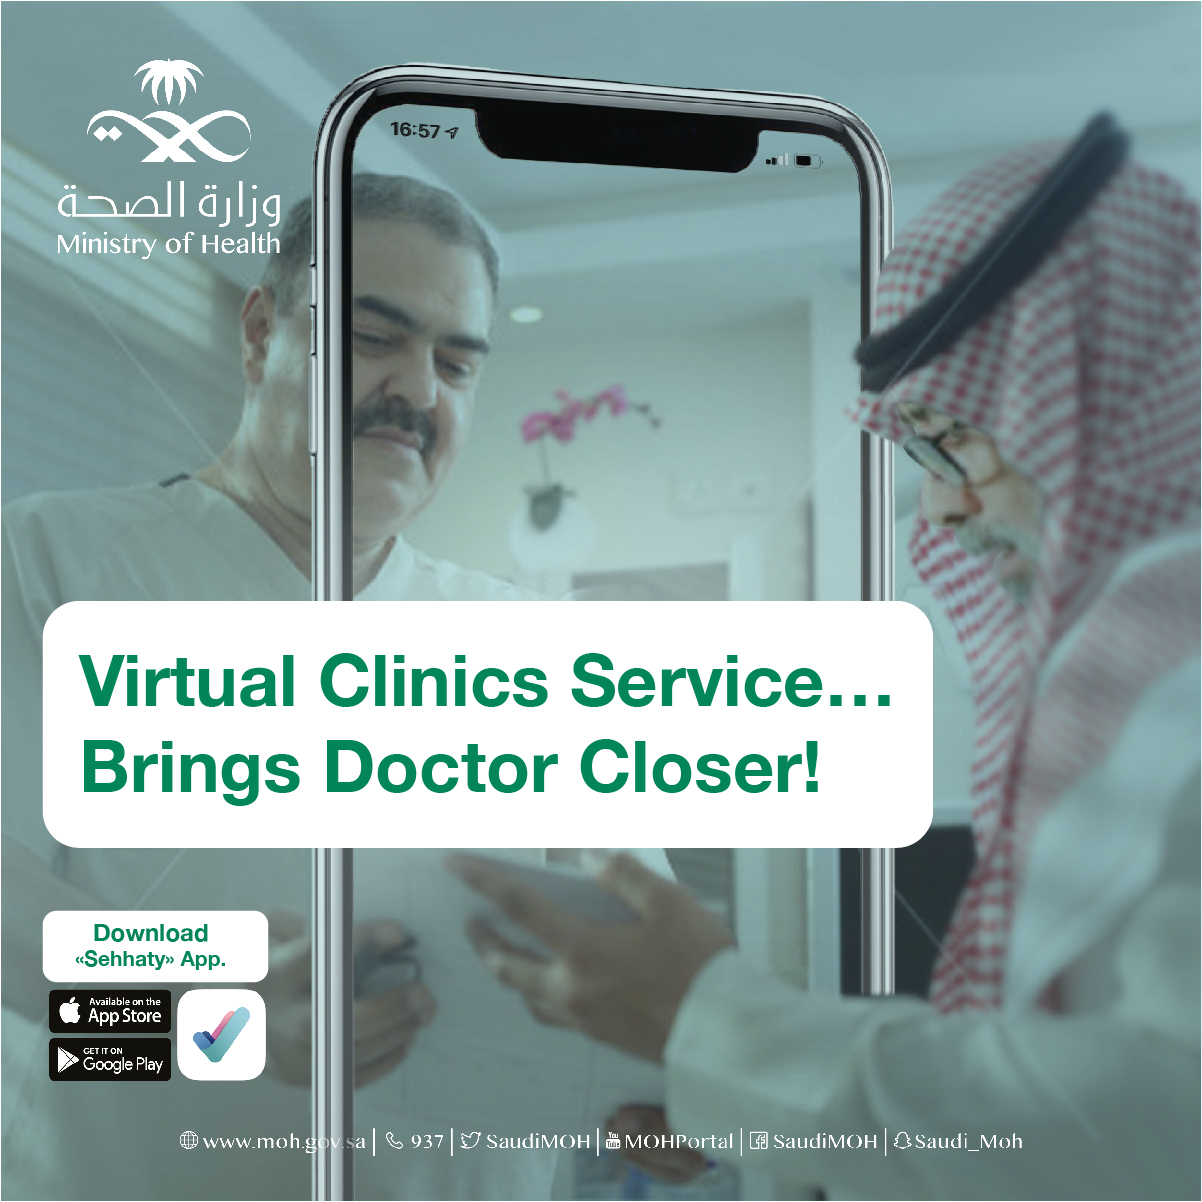 Virtual-Clinics-Service-Page-Image.jpg